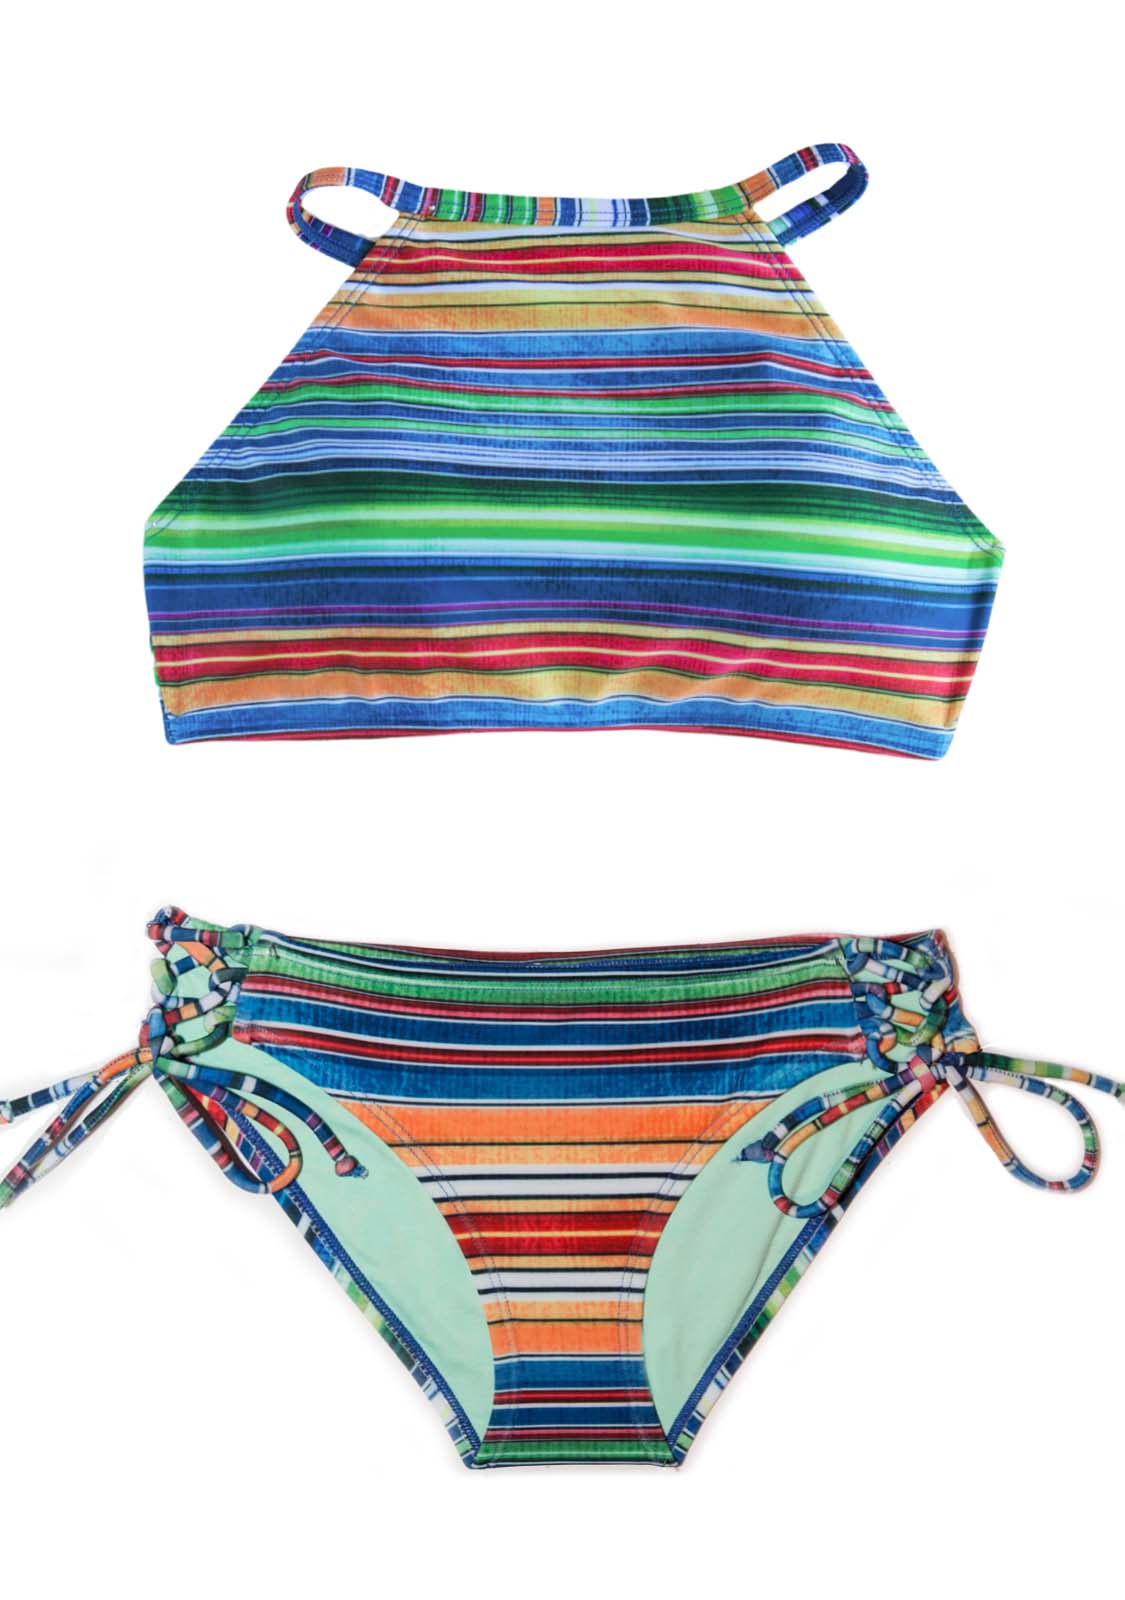 https://cdn.shopify.com/s/files/1/1490/7256/products/Baja-Soul-Halter-Style-swimsuit-set-for-girls-teens-tweens.jpg?v=1634003787